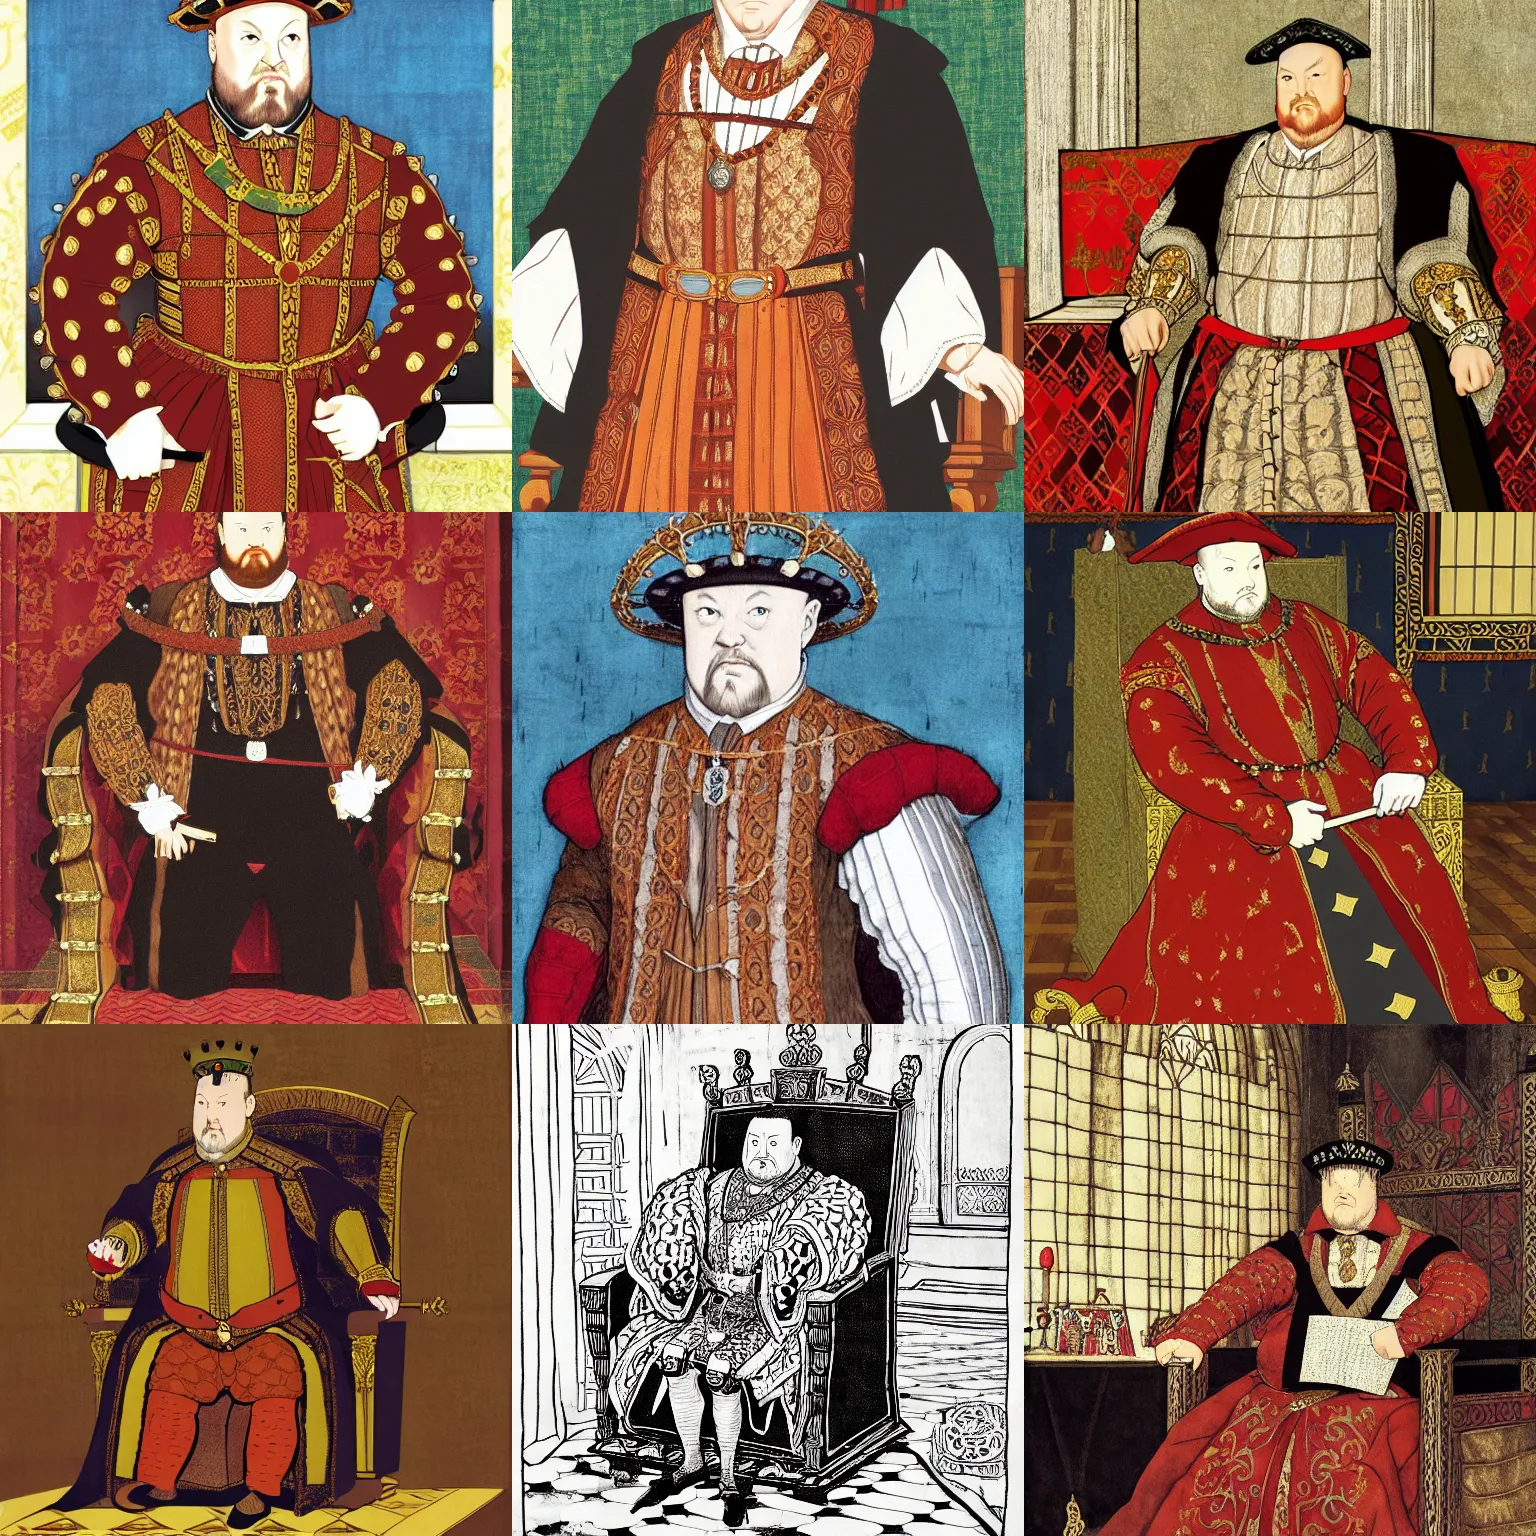 Prompt: Henry VIII on his throne, relaxed, anime portrait by Makoto Shinkai and Satoshi Kon